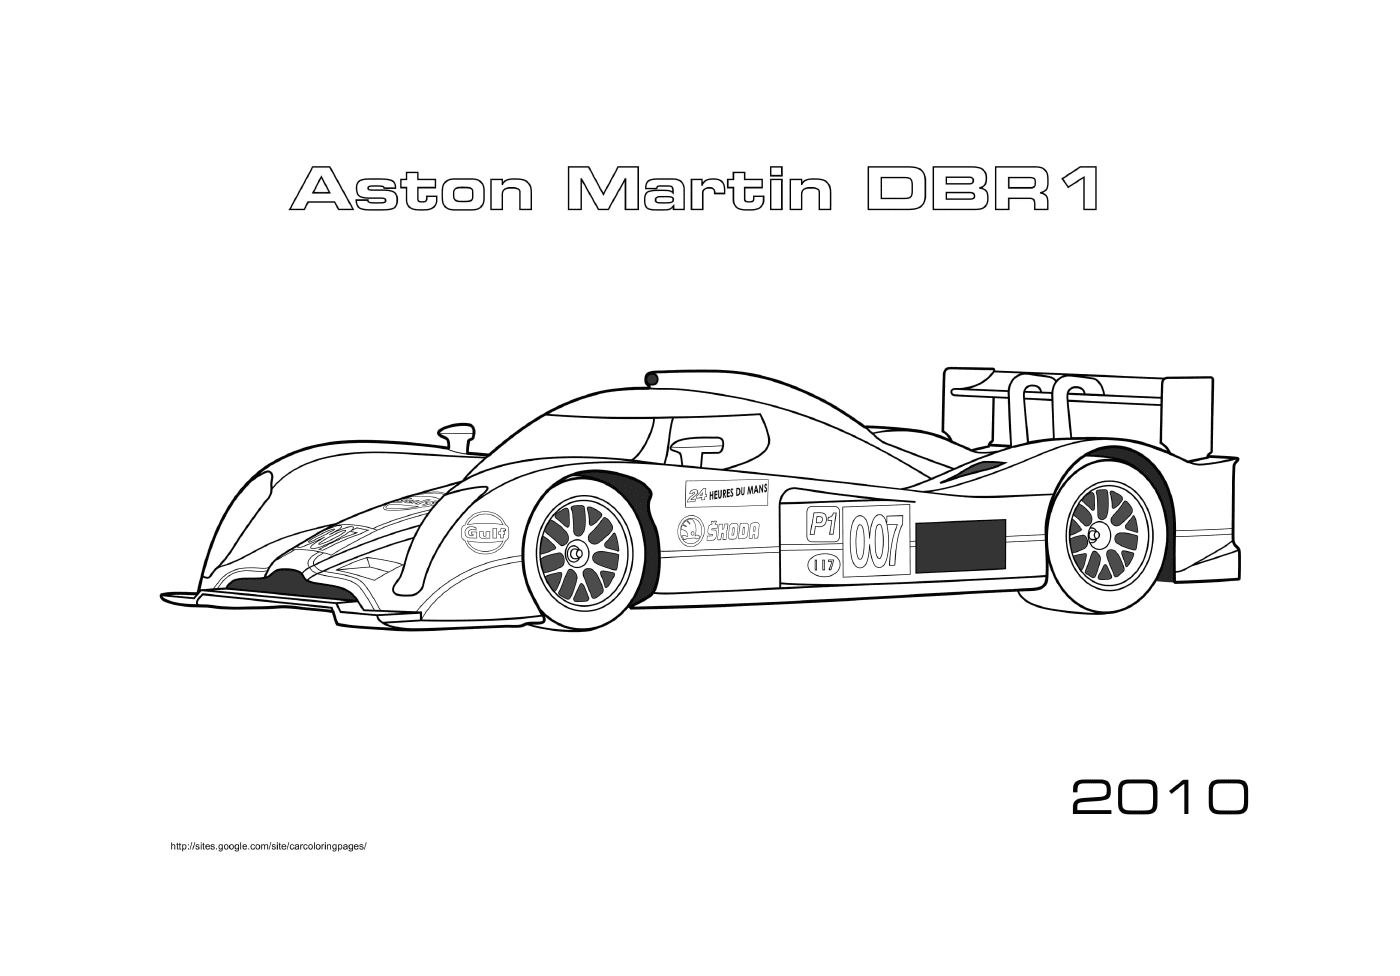  Aston Martin DBR1 2010, vettura di Formula 1 